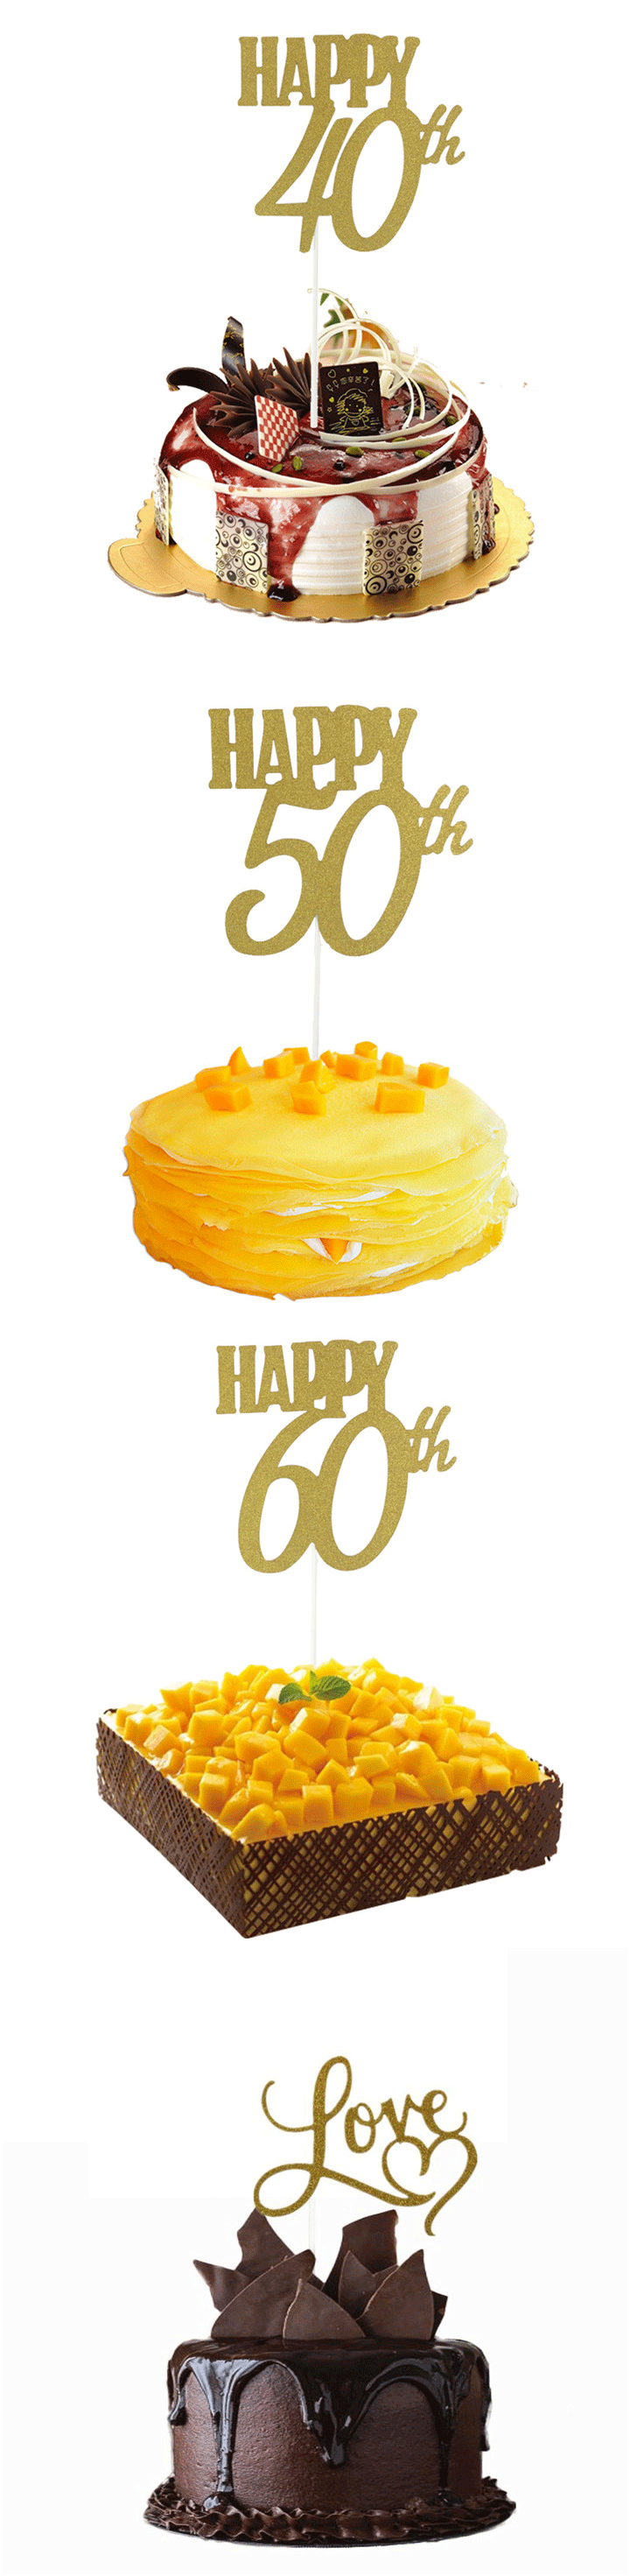 Happy-30th-birthday-cake-decoration-China